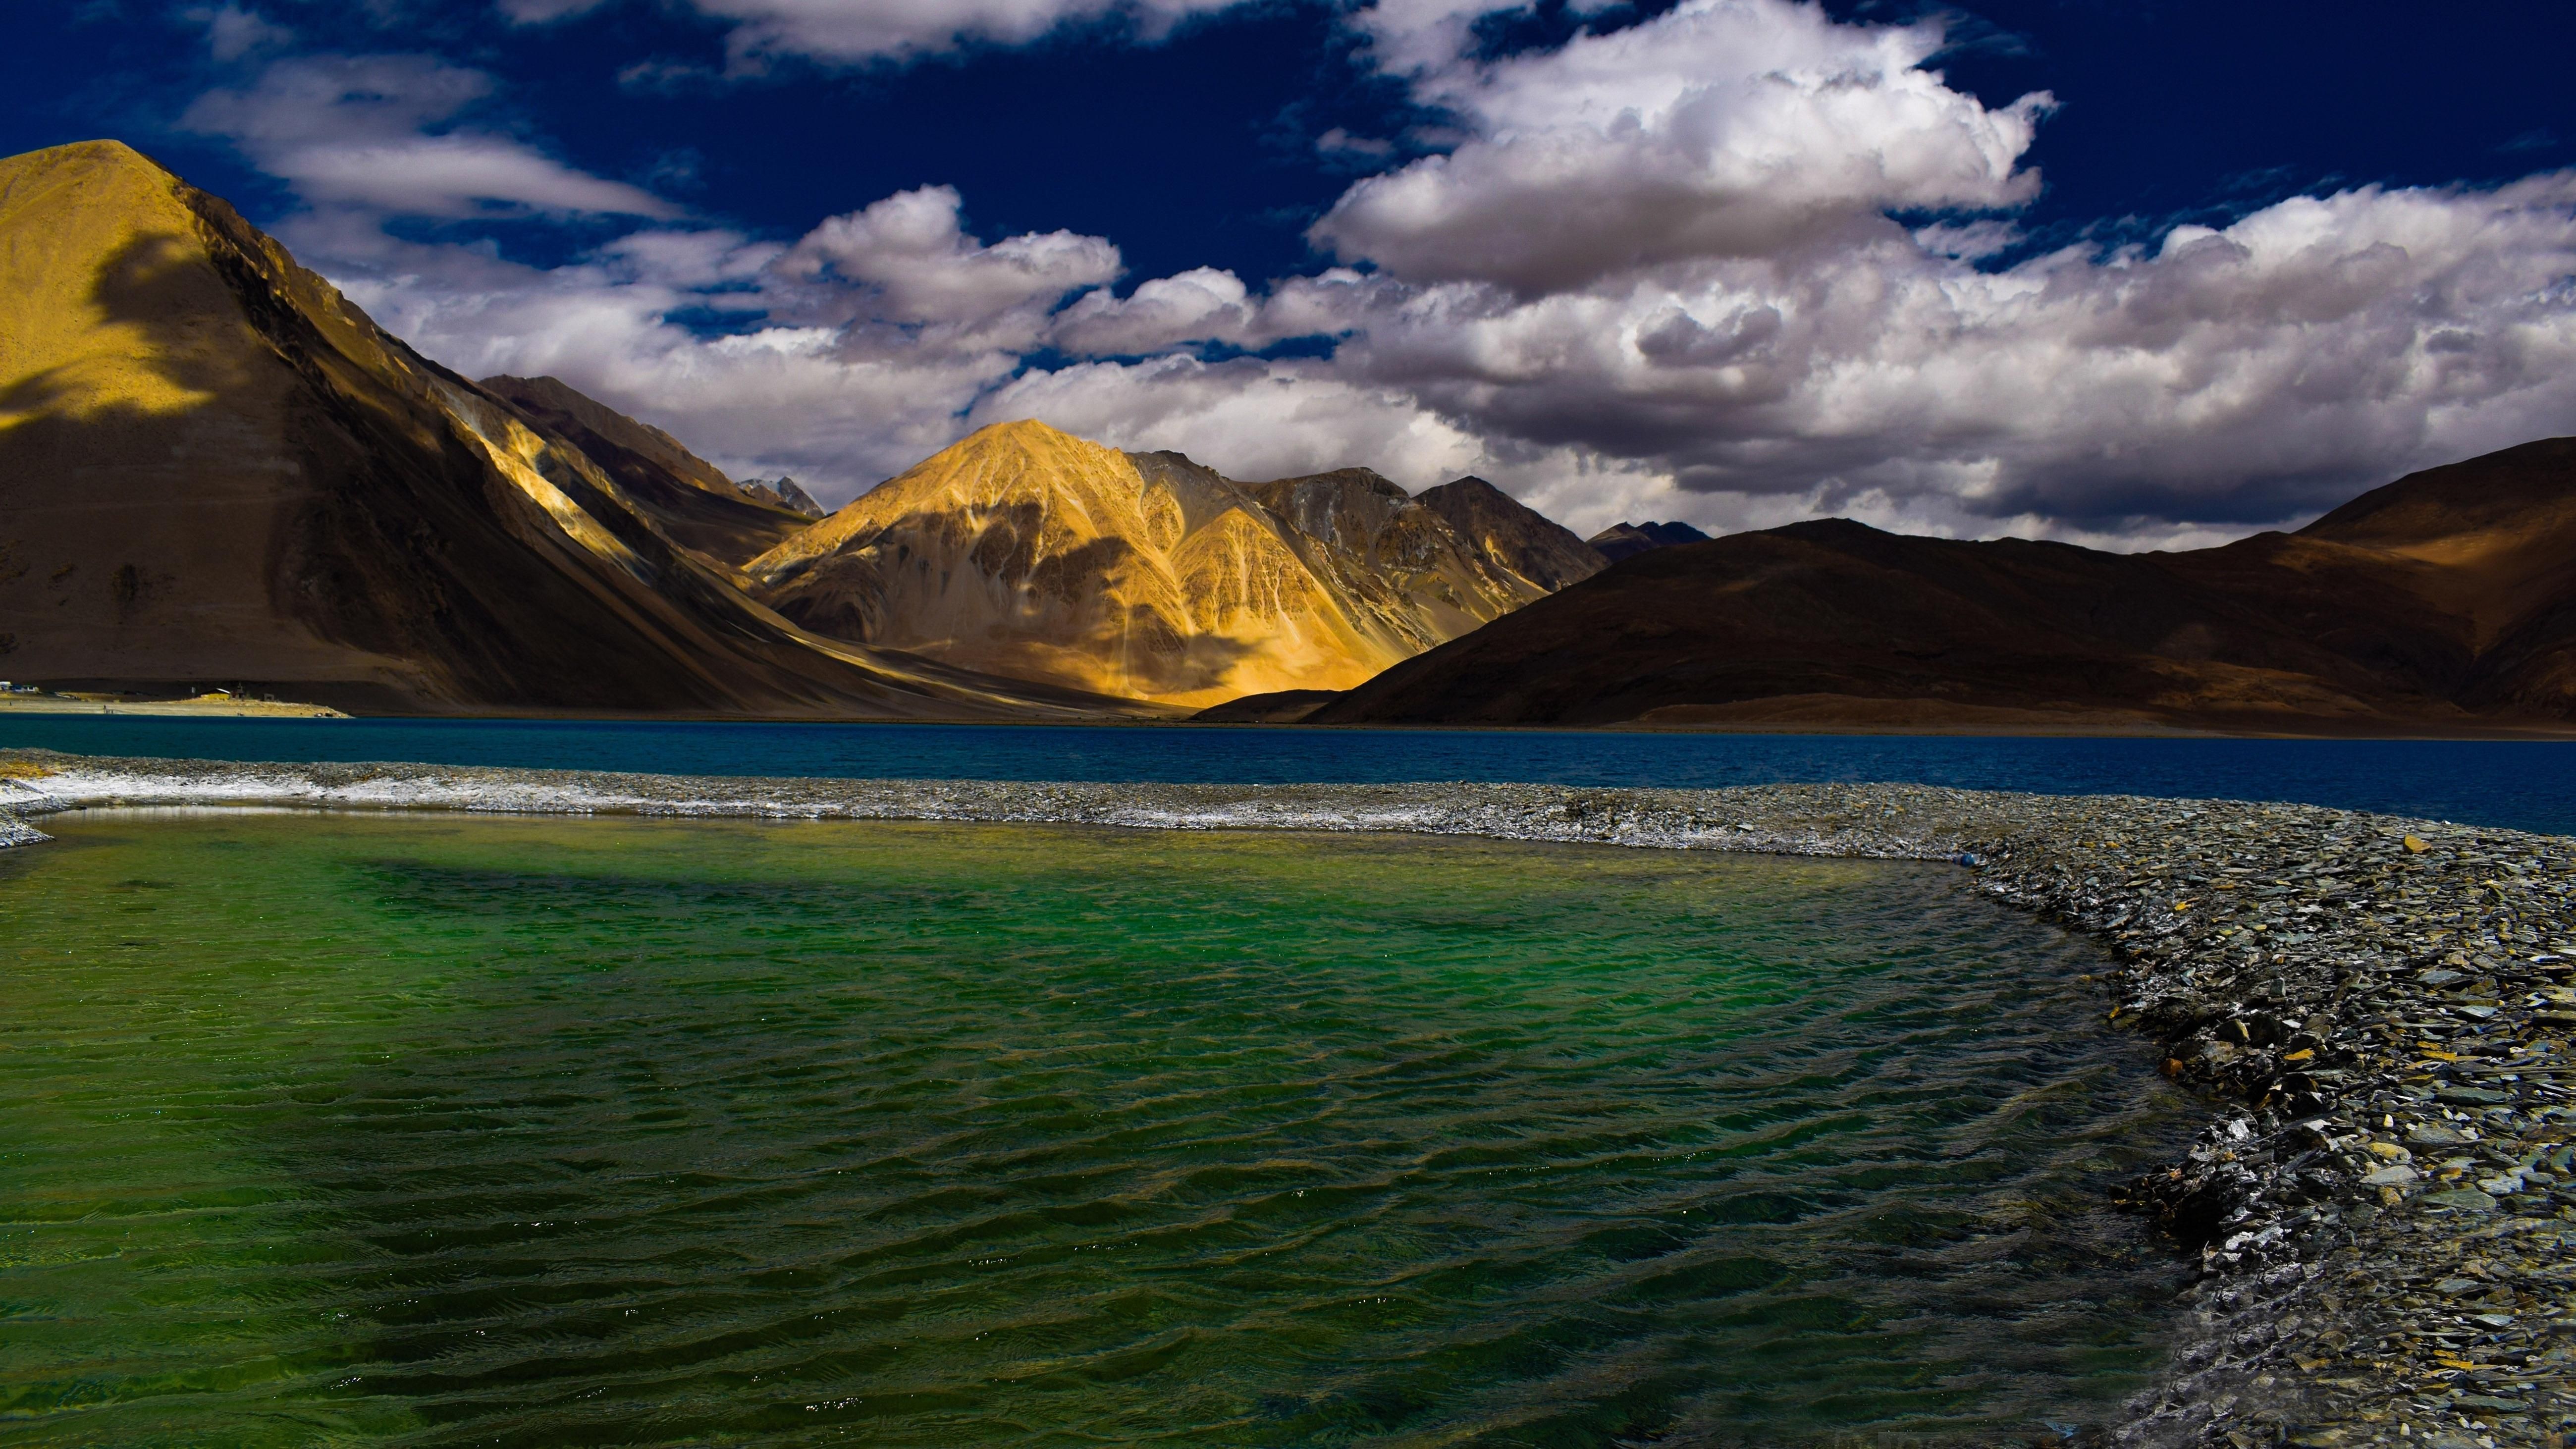 Pangong Tso (Lake) Ladakh Kashmir India[OC][5200x2925]